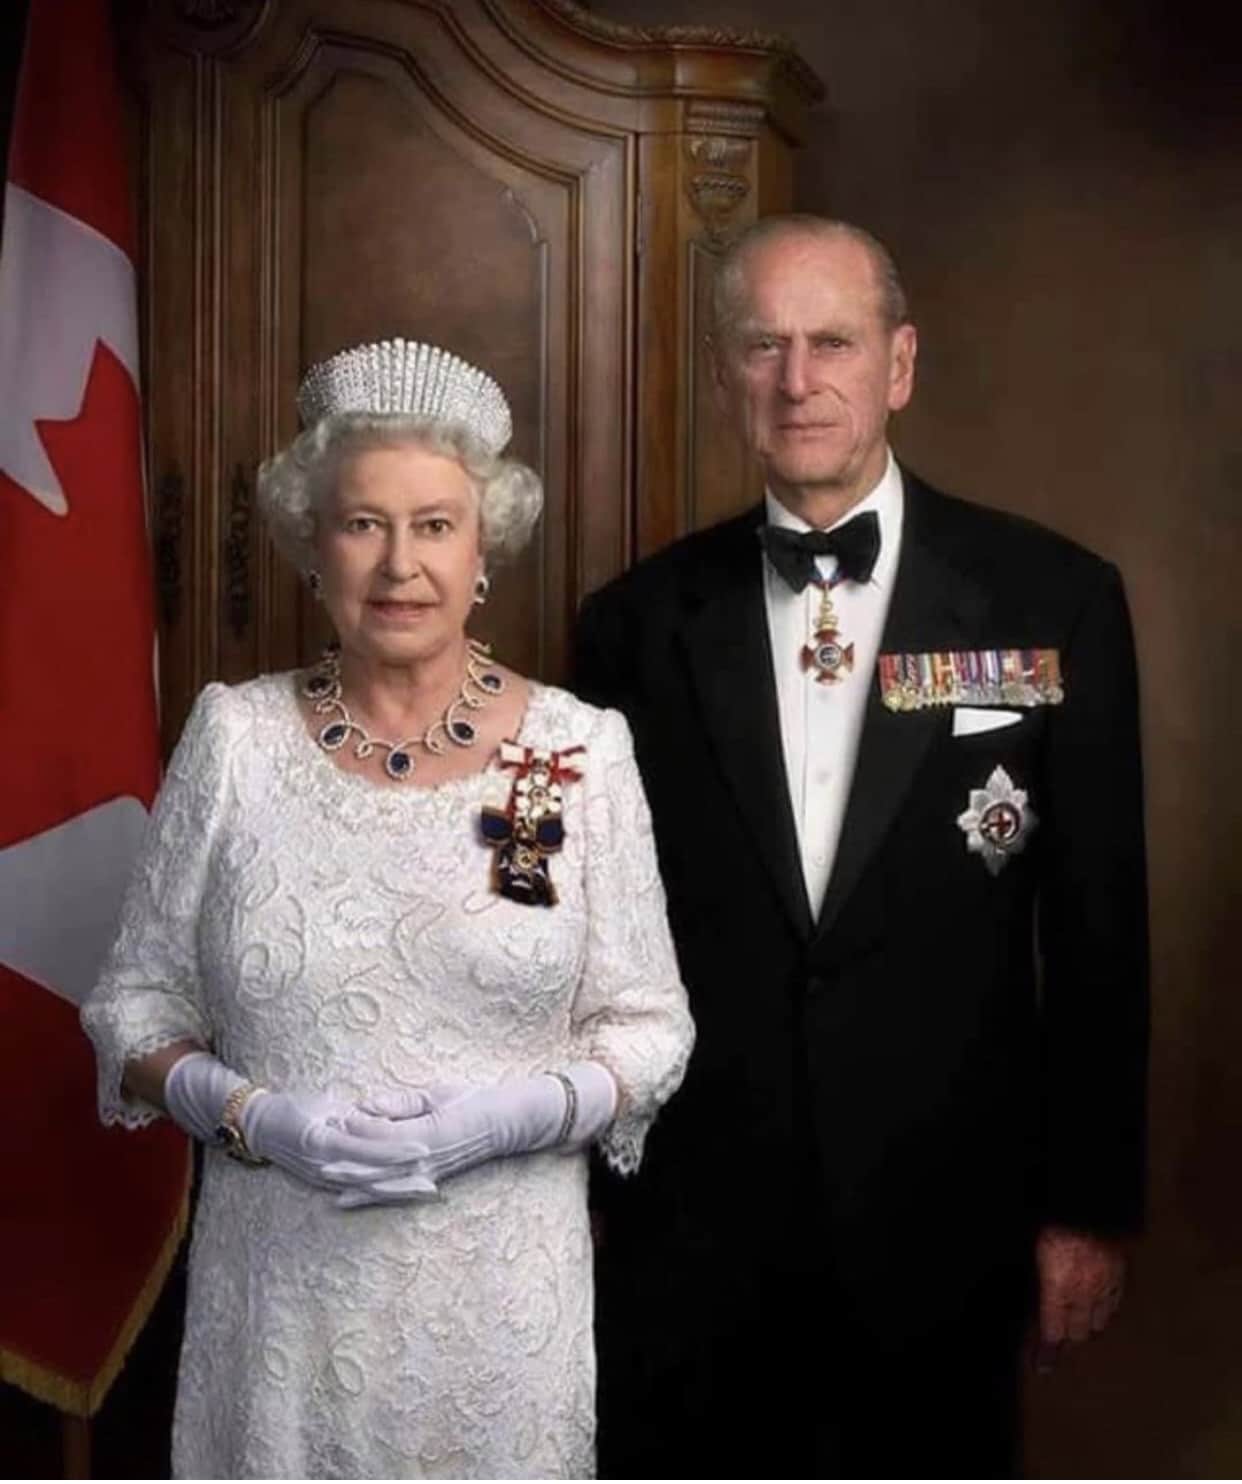 Prince Philip with his wife Queen Elizabeth II 